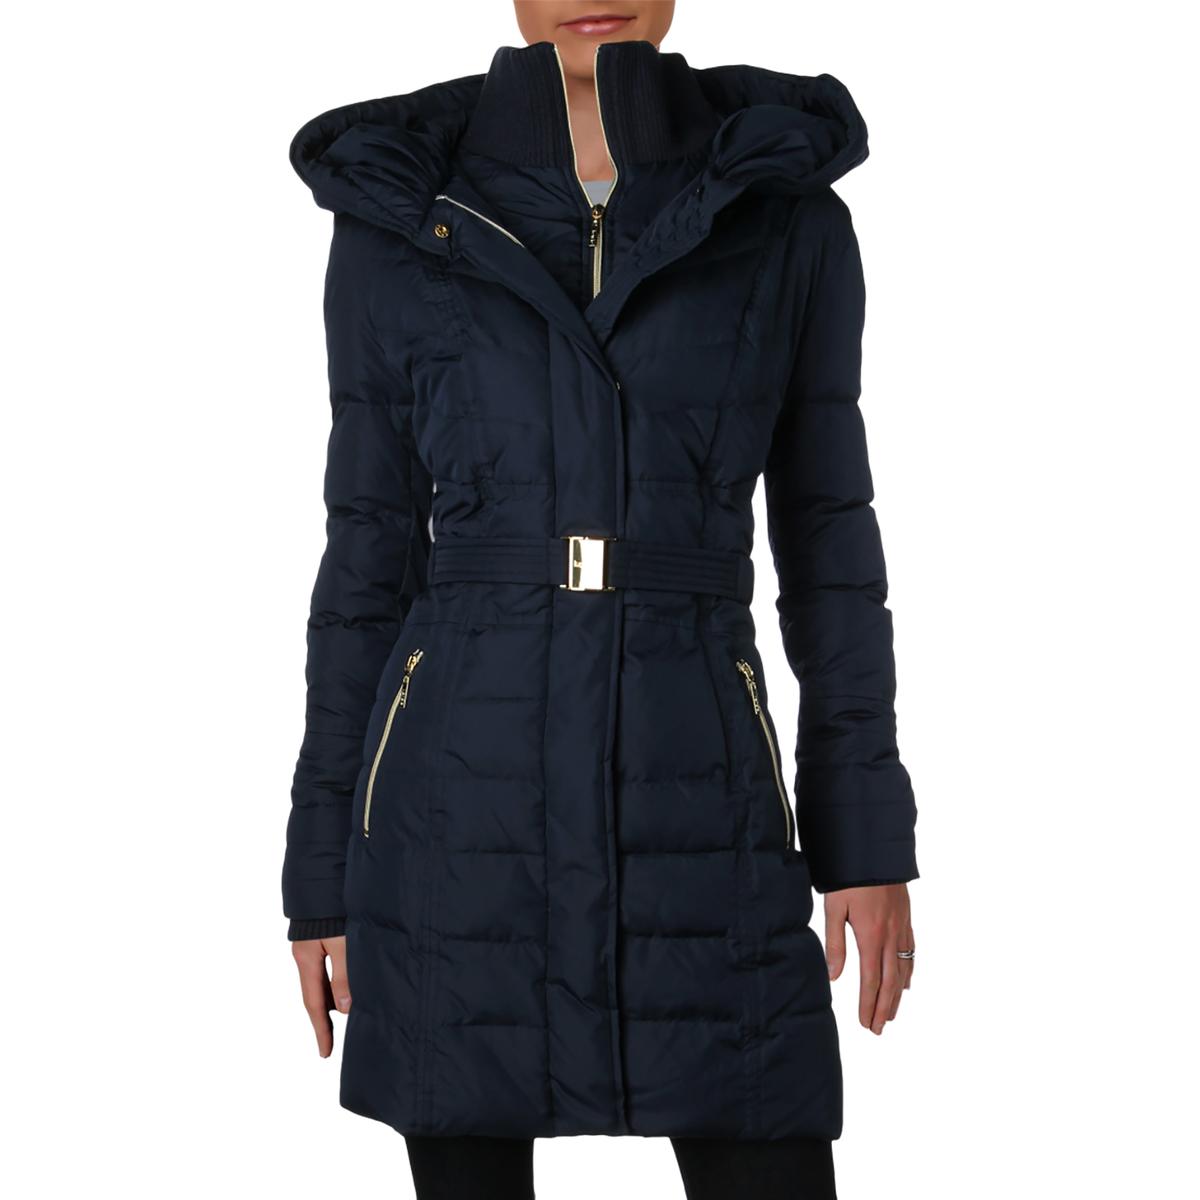 Womens Winter Coats On Sale